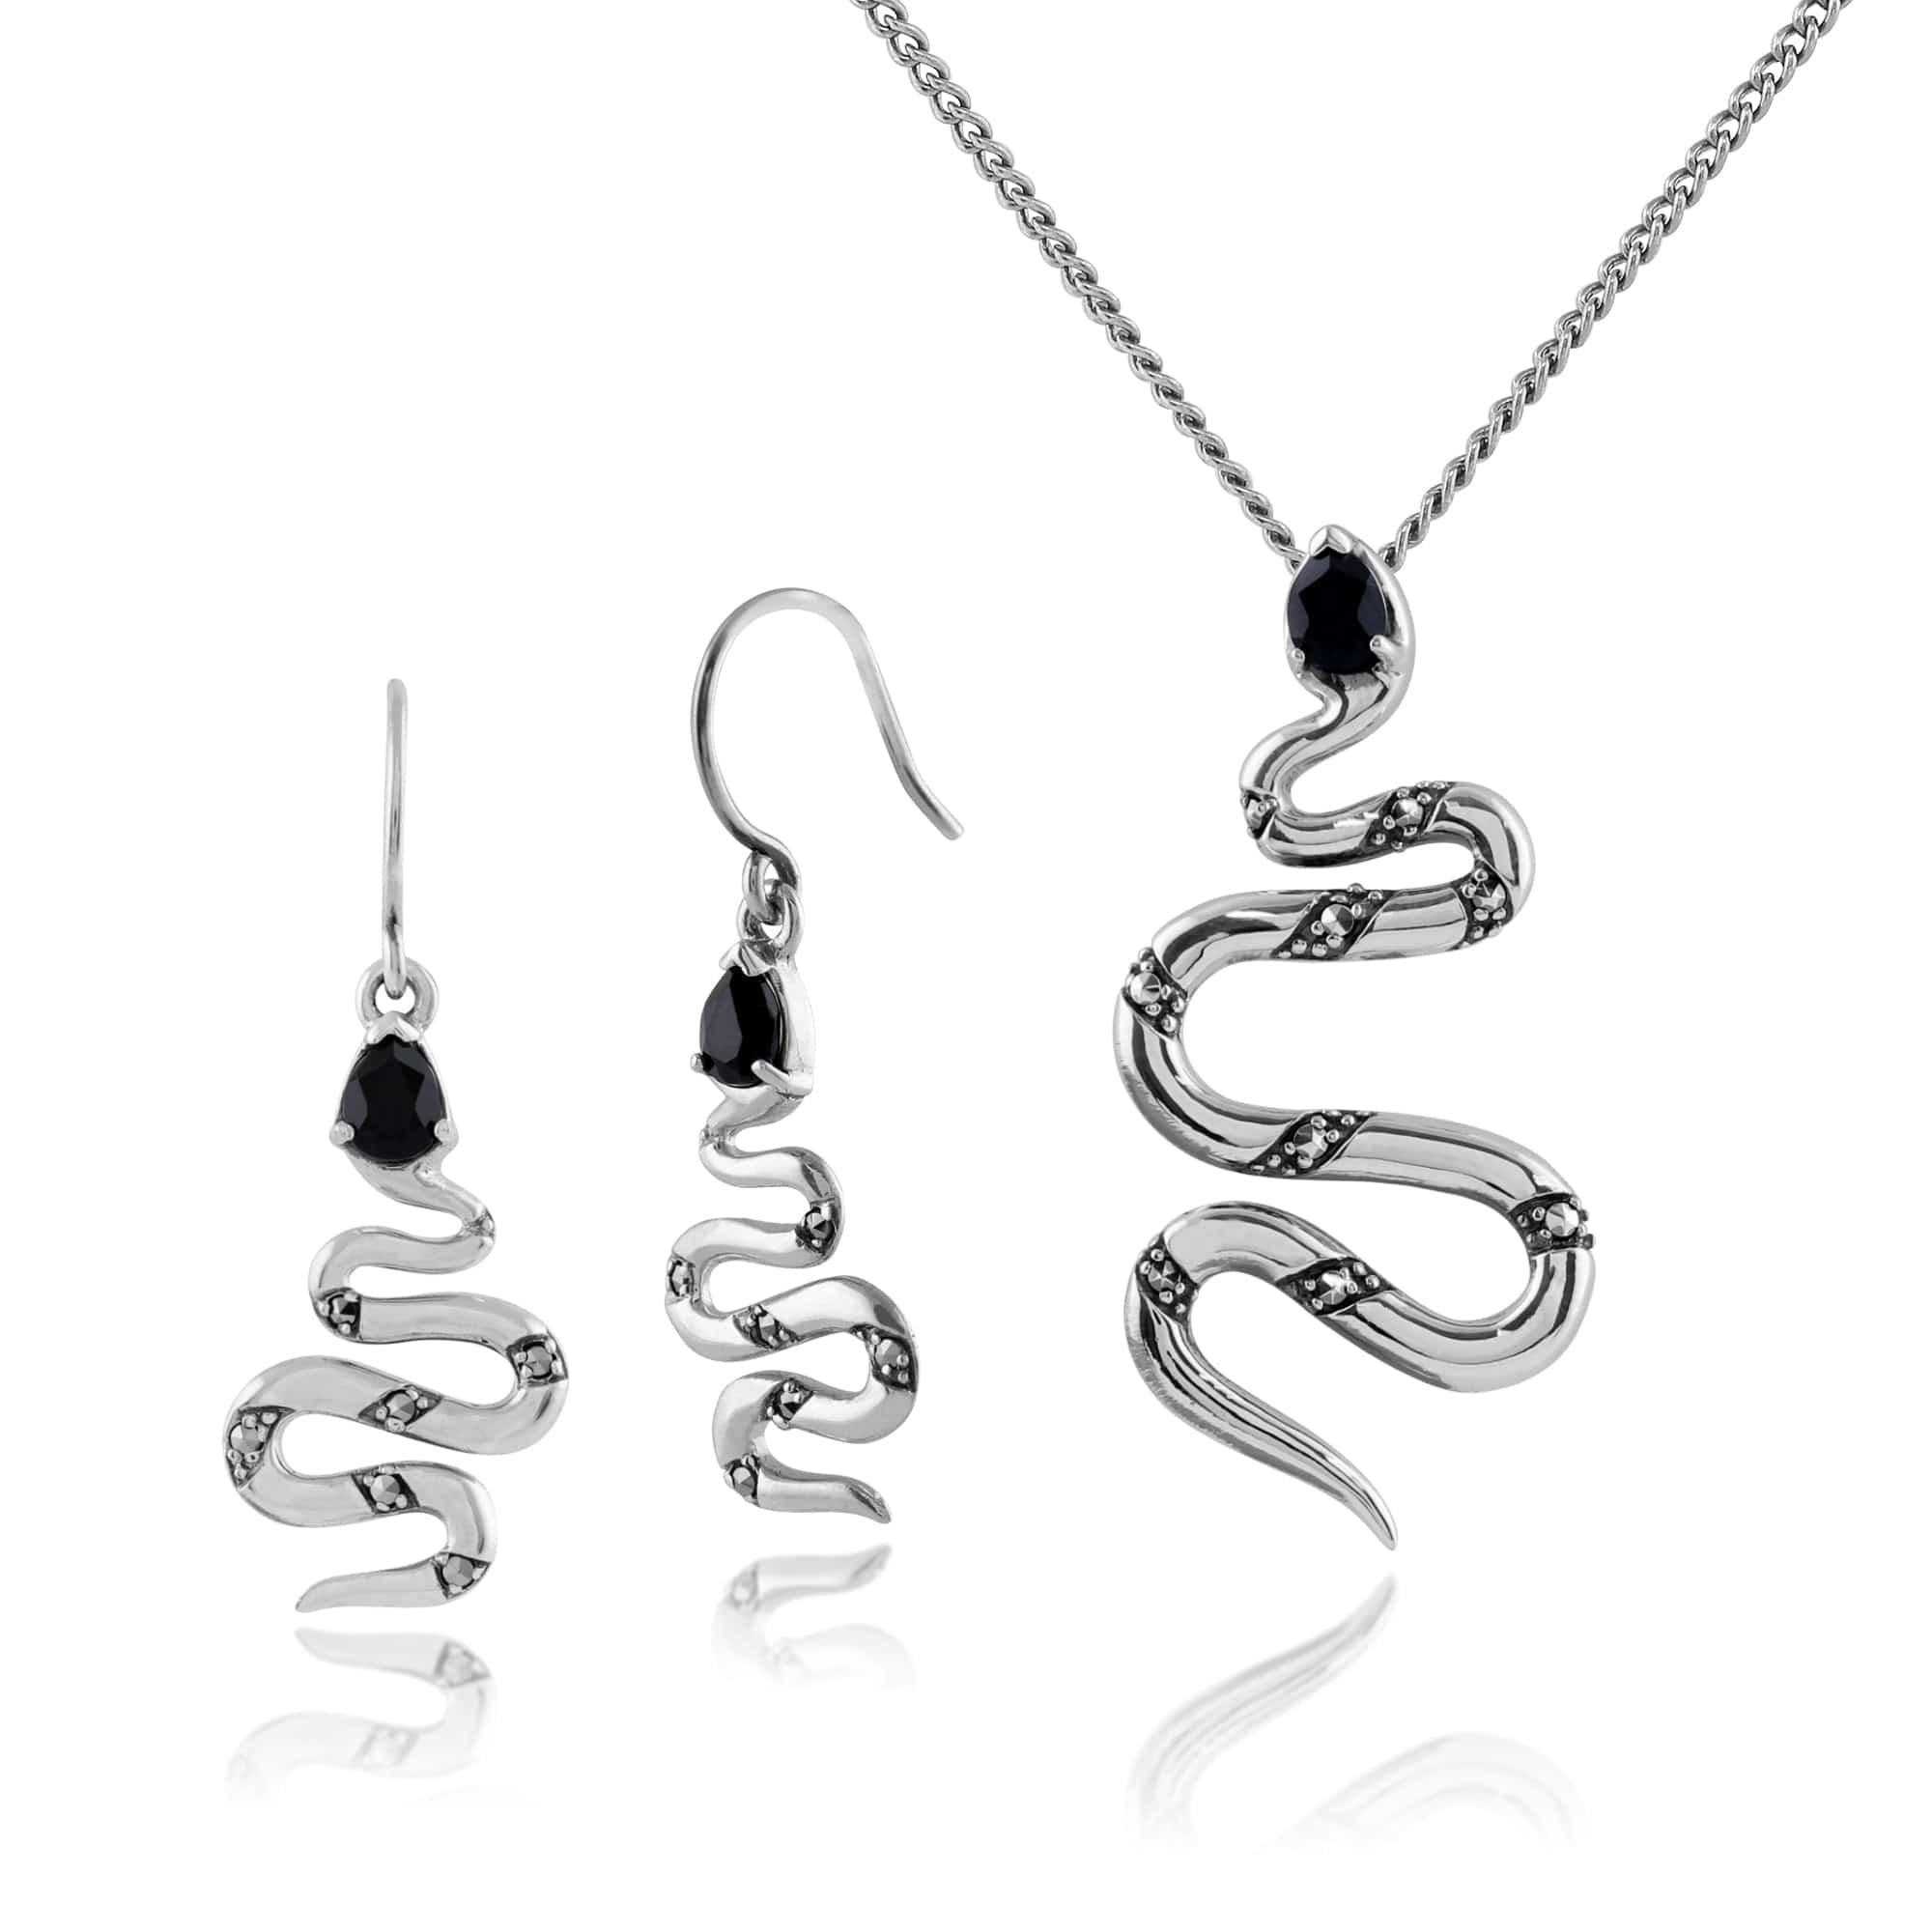 214E663902925-214N661401925 Art Nouveau Style Style Pear Black Spinel & Marcasite Snake Drop Earrings & Necklace Set in 925 Sterling Silver 1